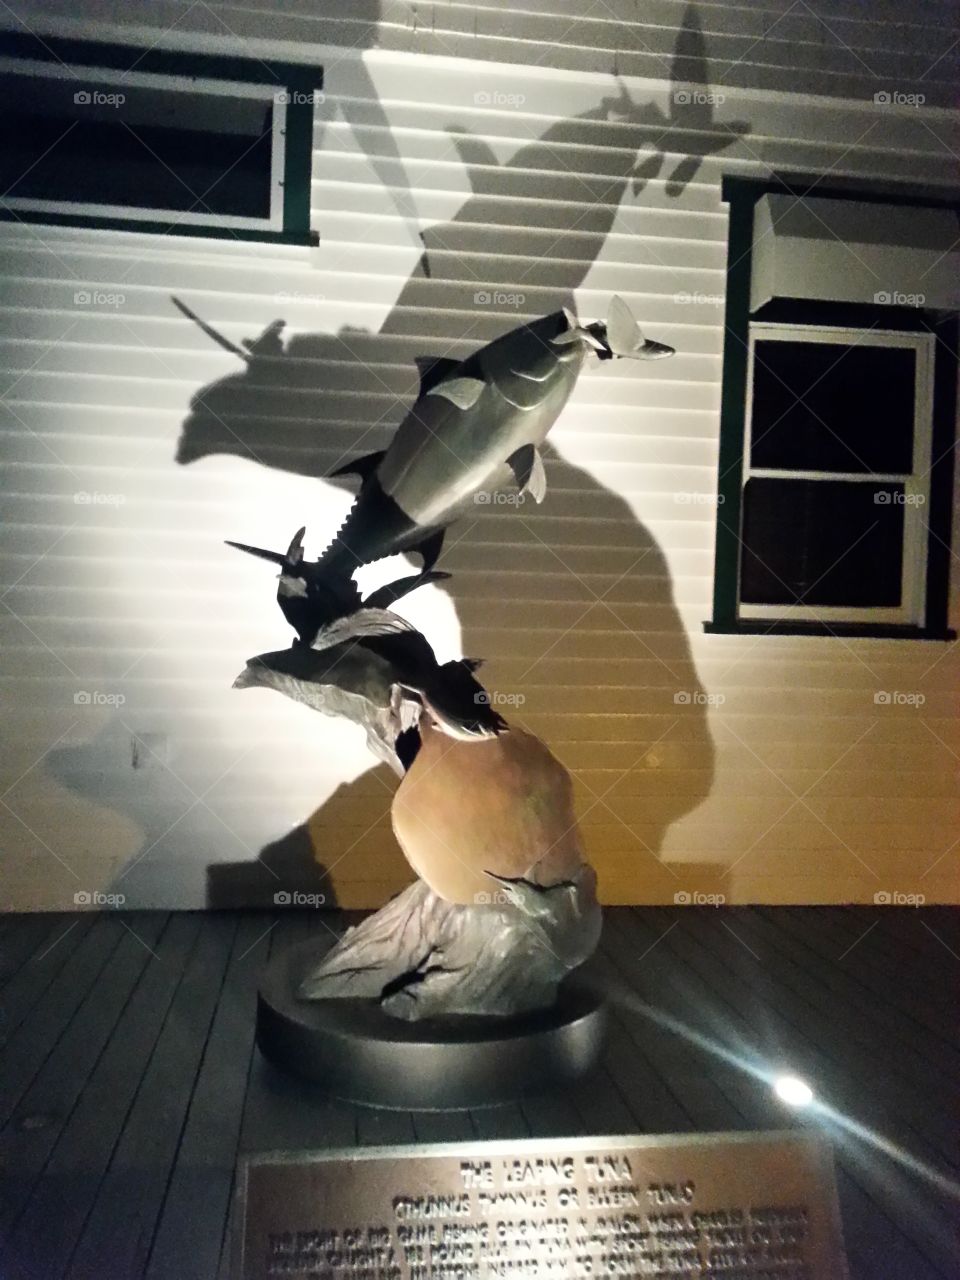 Marlin statue and shadows